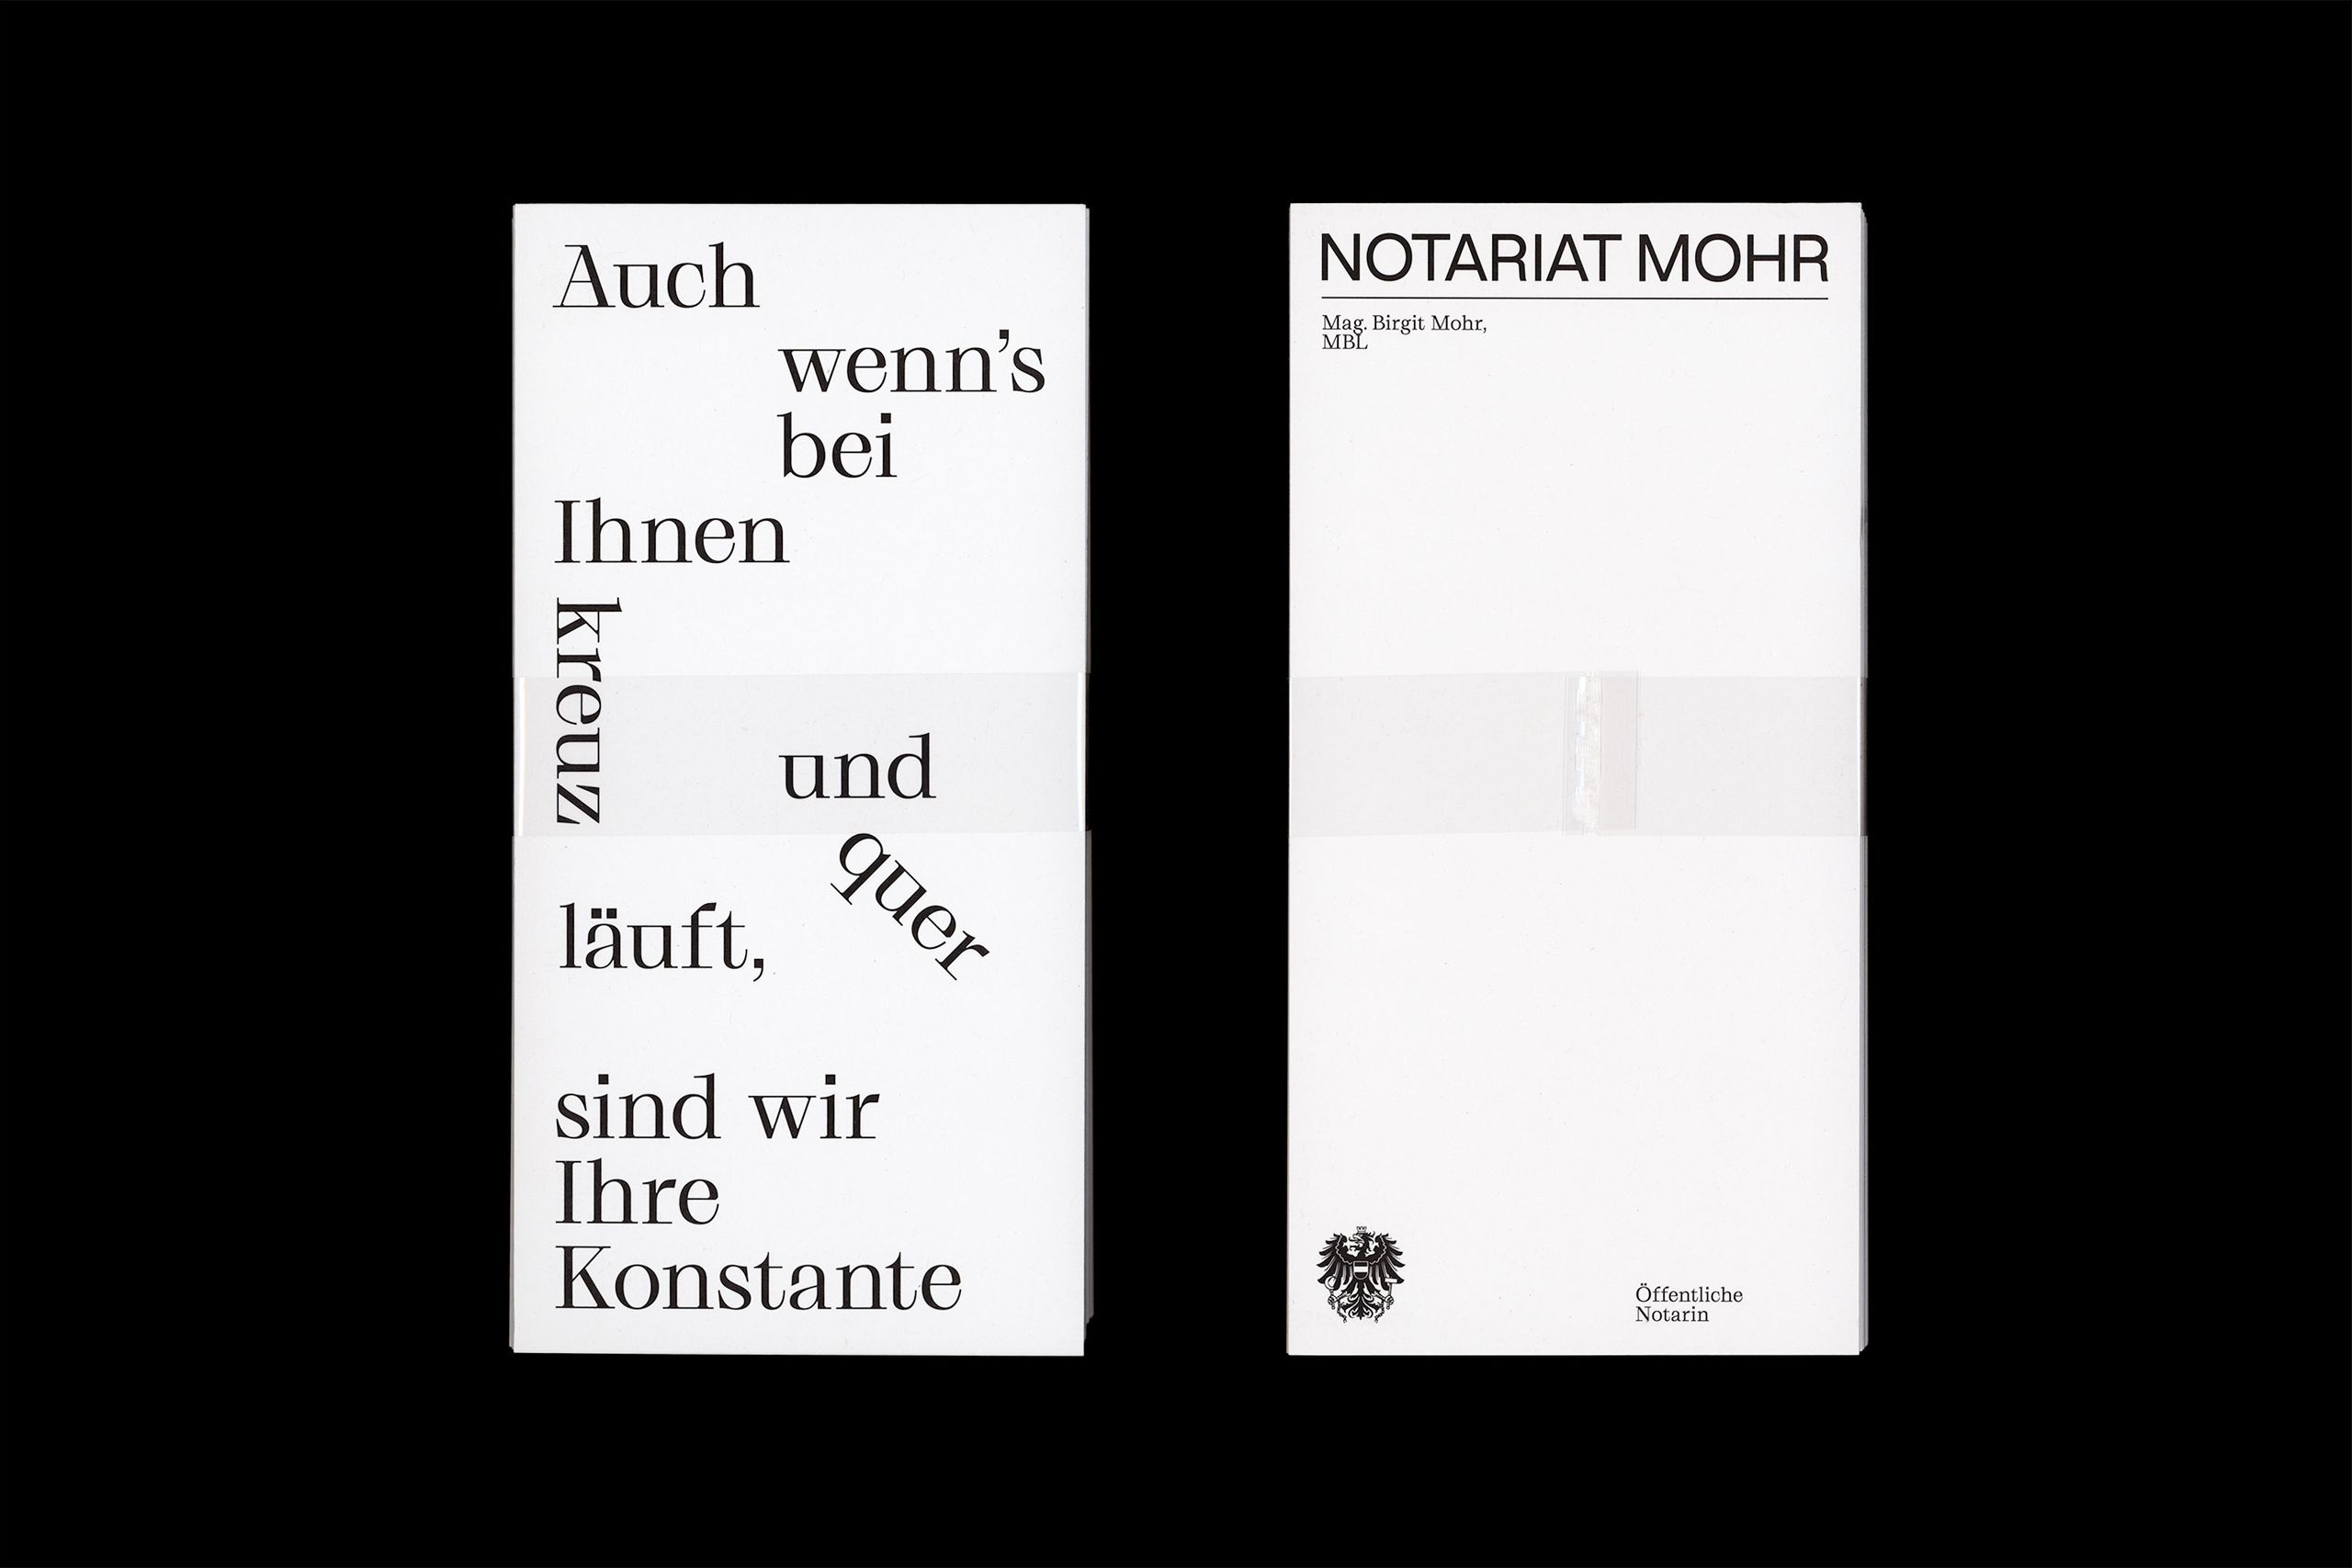 Notariat Mohr